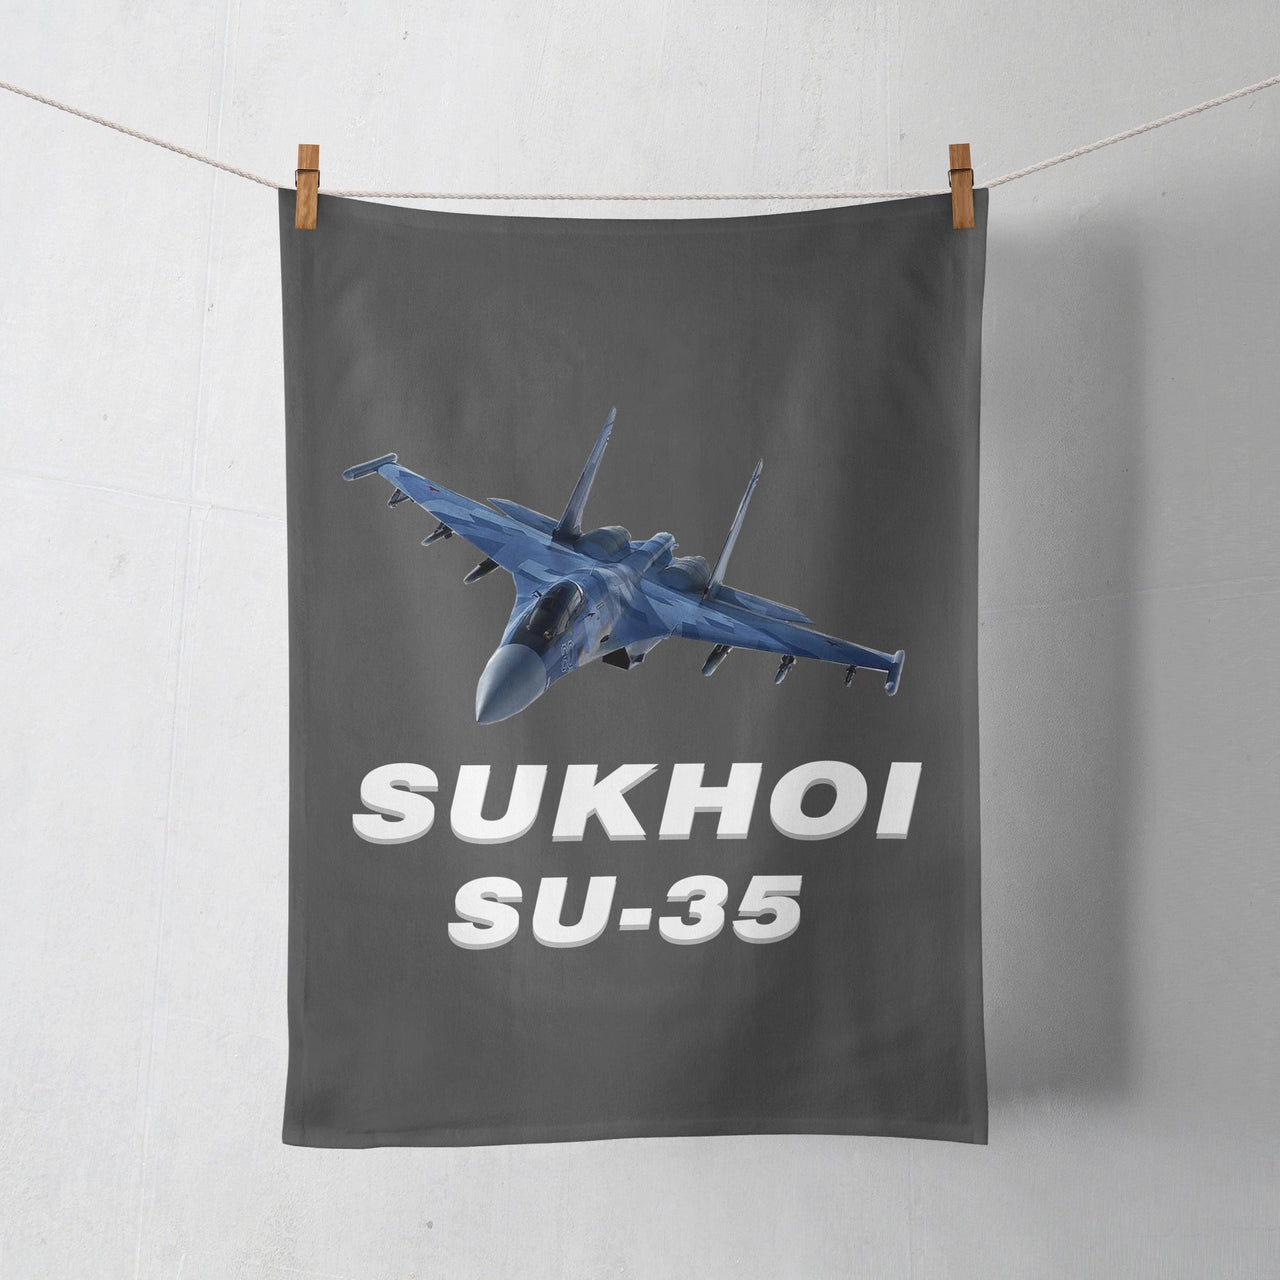 The Sukhoi SU-35 Designed Towels